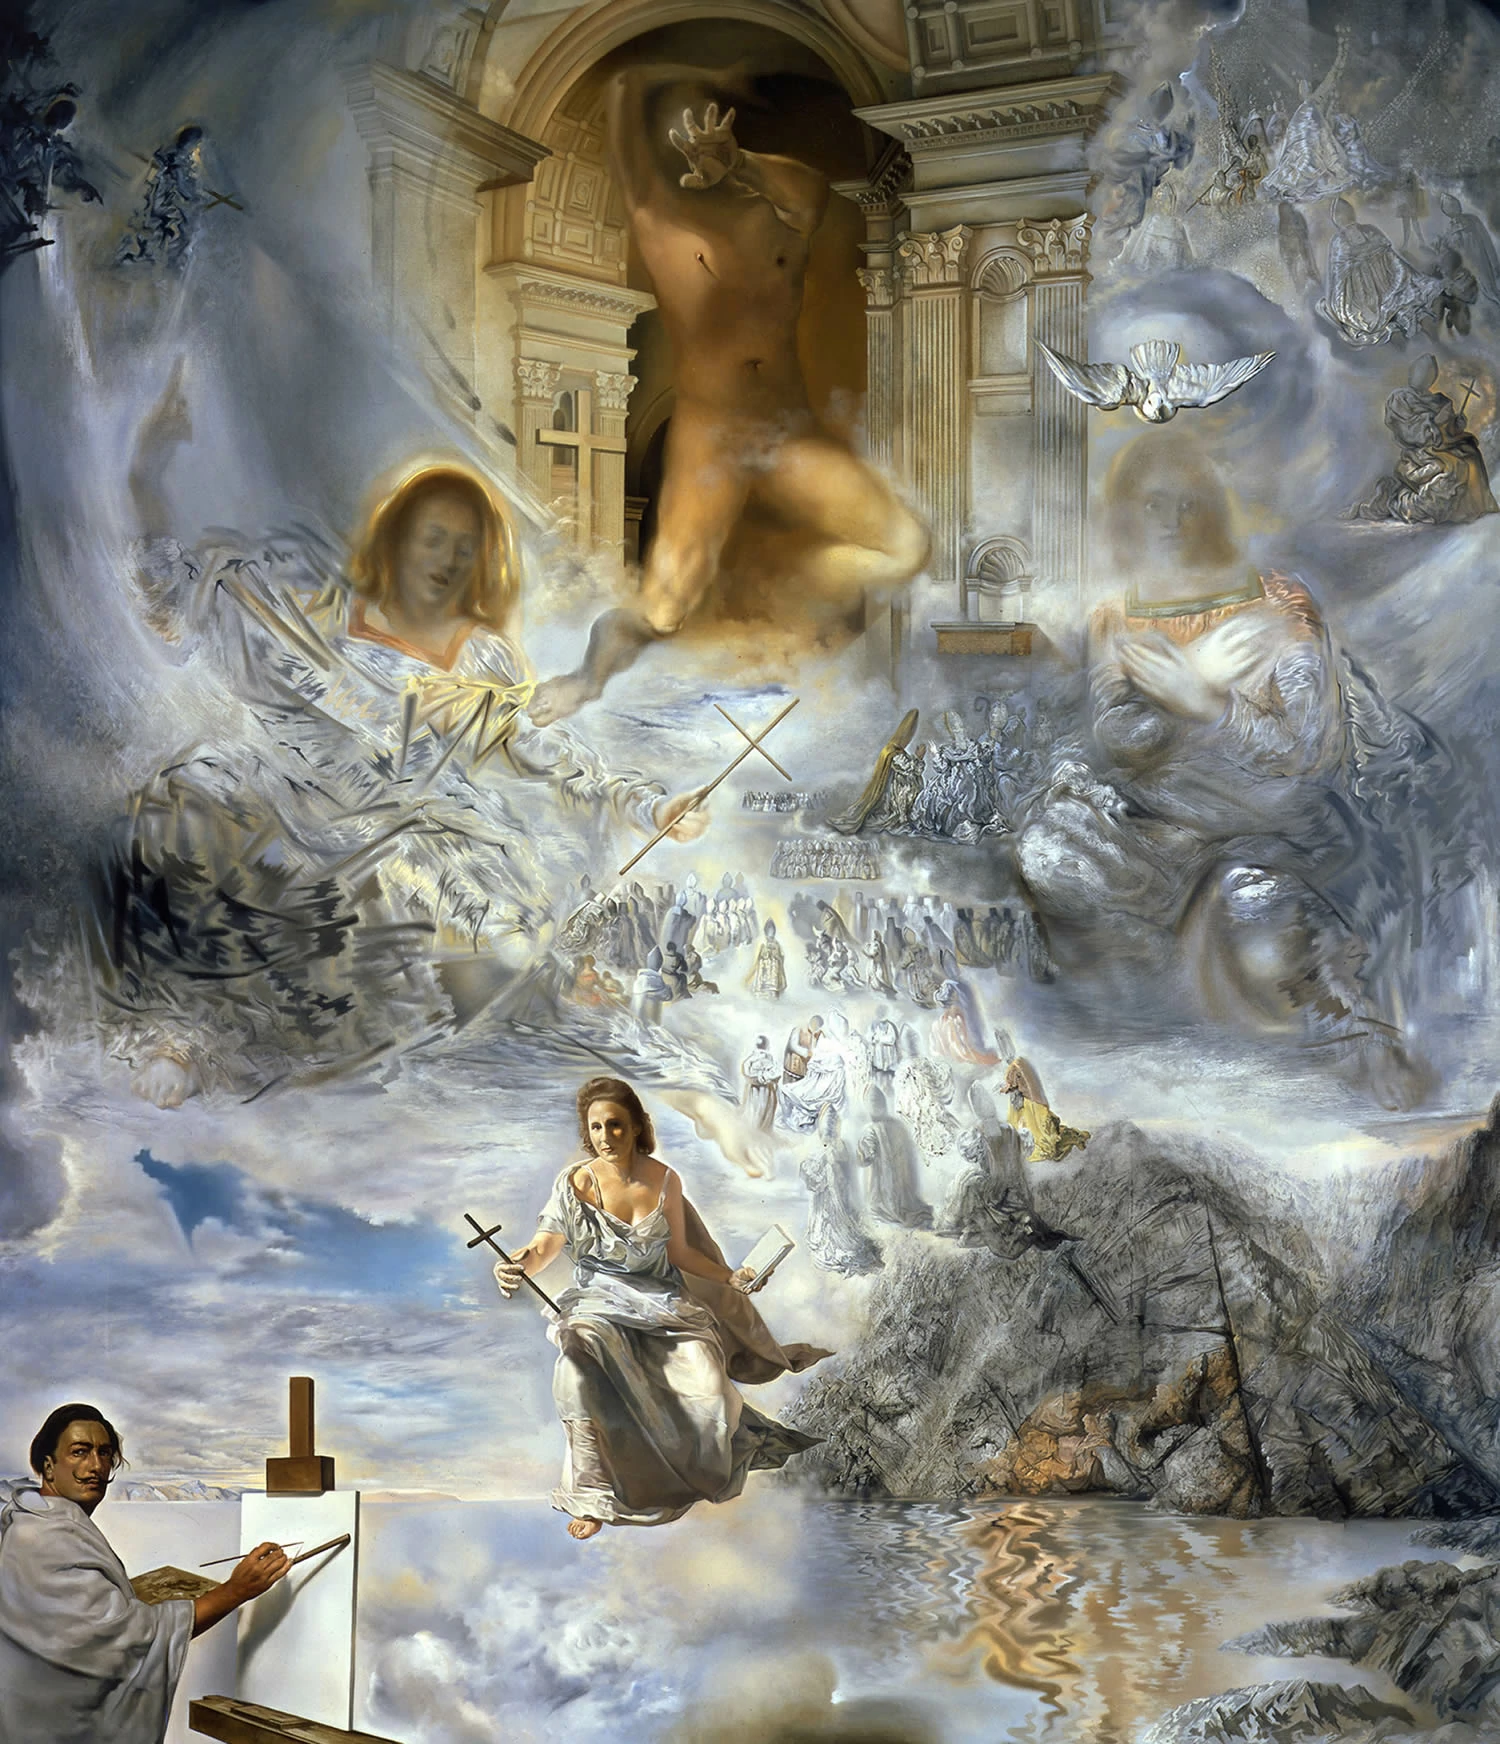 The Ecumenical Council, Salvador Dalí